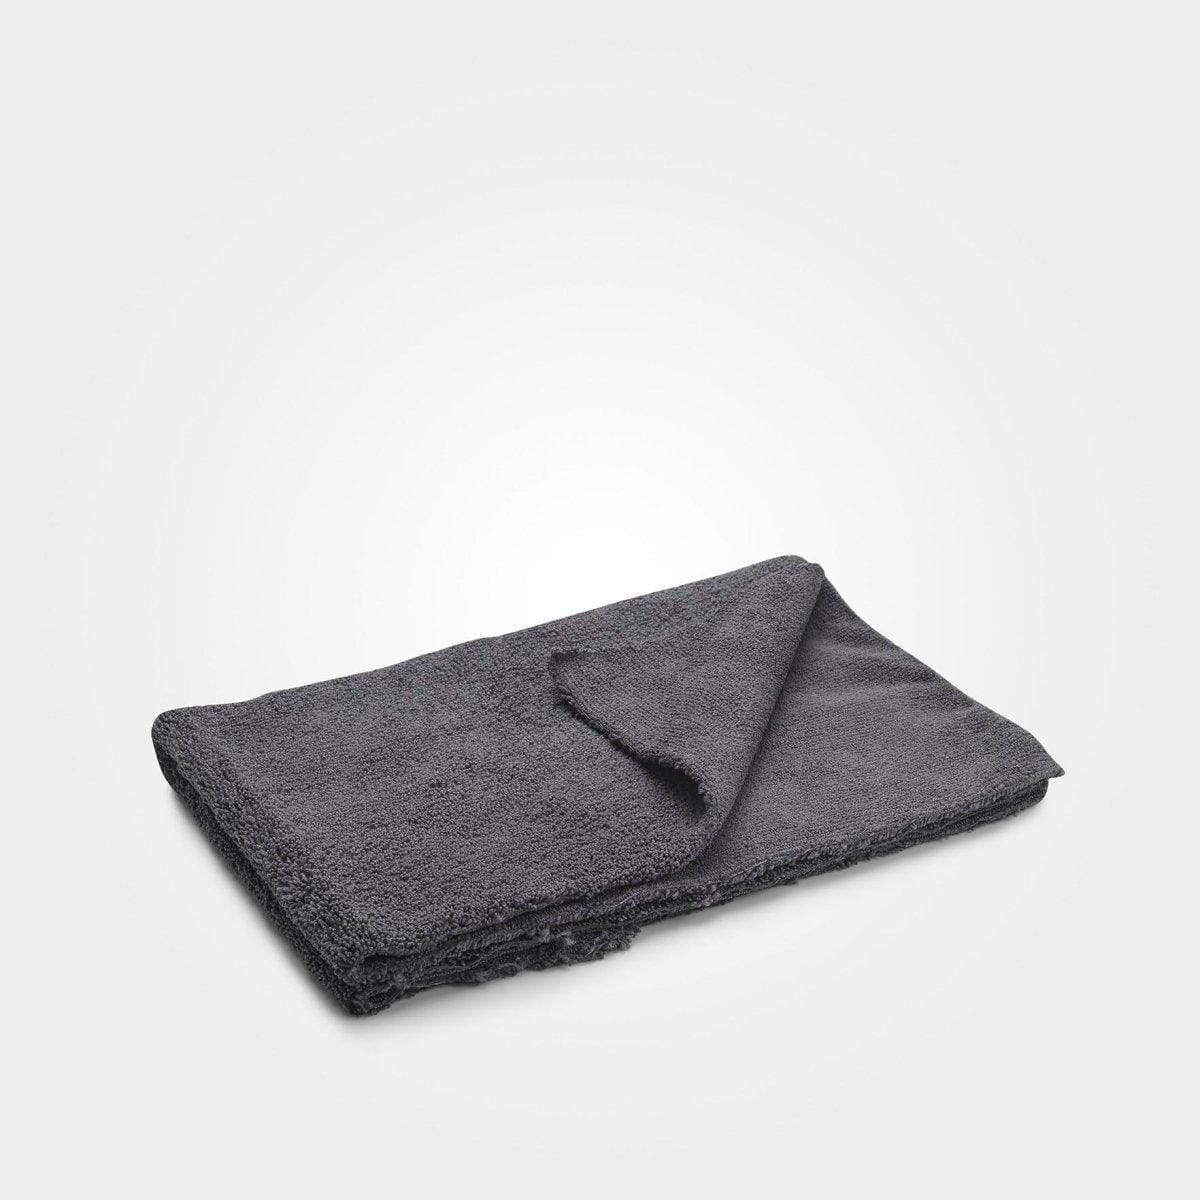 Duo-Plush 410 Microfiber Towel - Red/Black w/ Black Silk Edges - 16 x 16